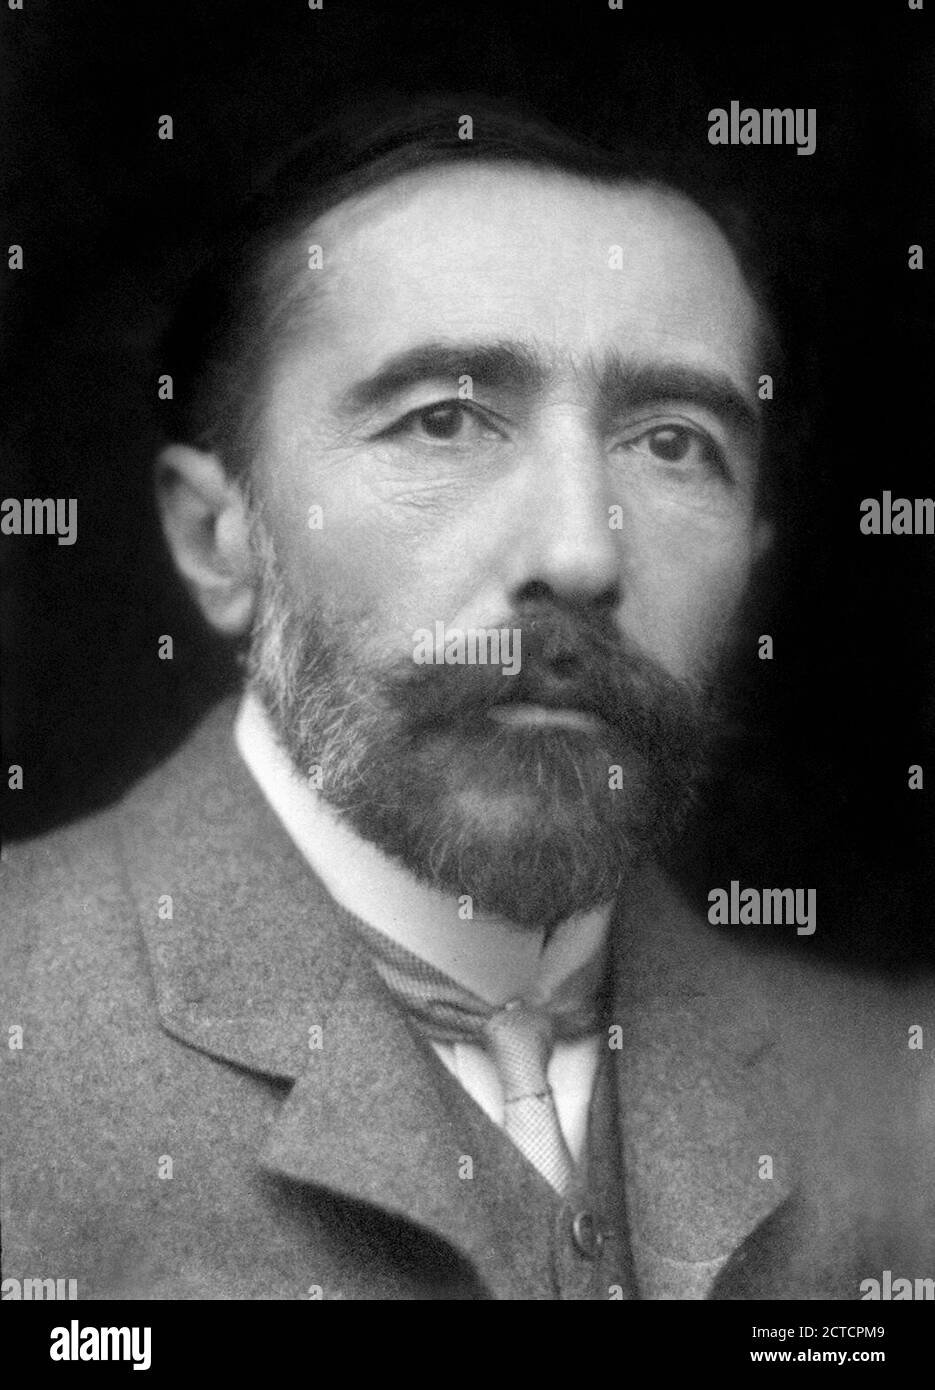 Joseph Conrad. Portrait of the Polish-British writer Józef Teodor Konrad Korzeniowski (1857-1924) by George Charles Beresford, 1904 Stock Photo